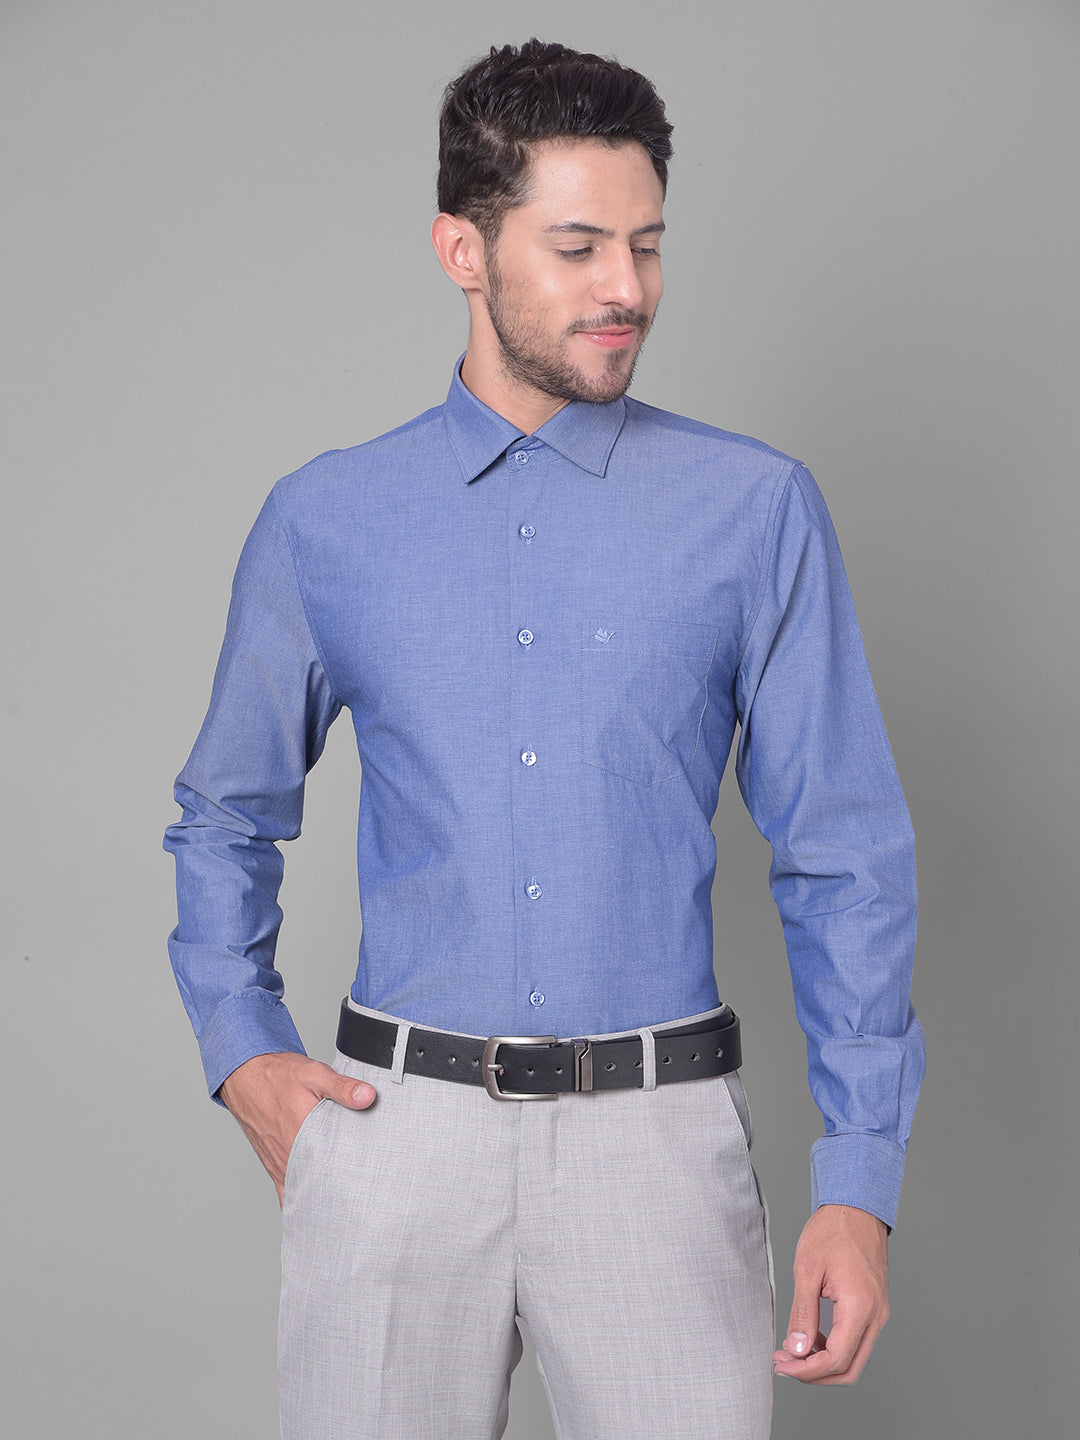 Cobb Blue Solid Slim Fit Formal Shirt Blue